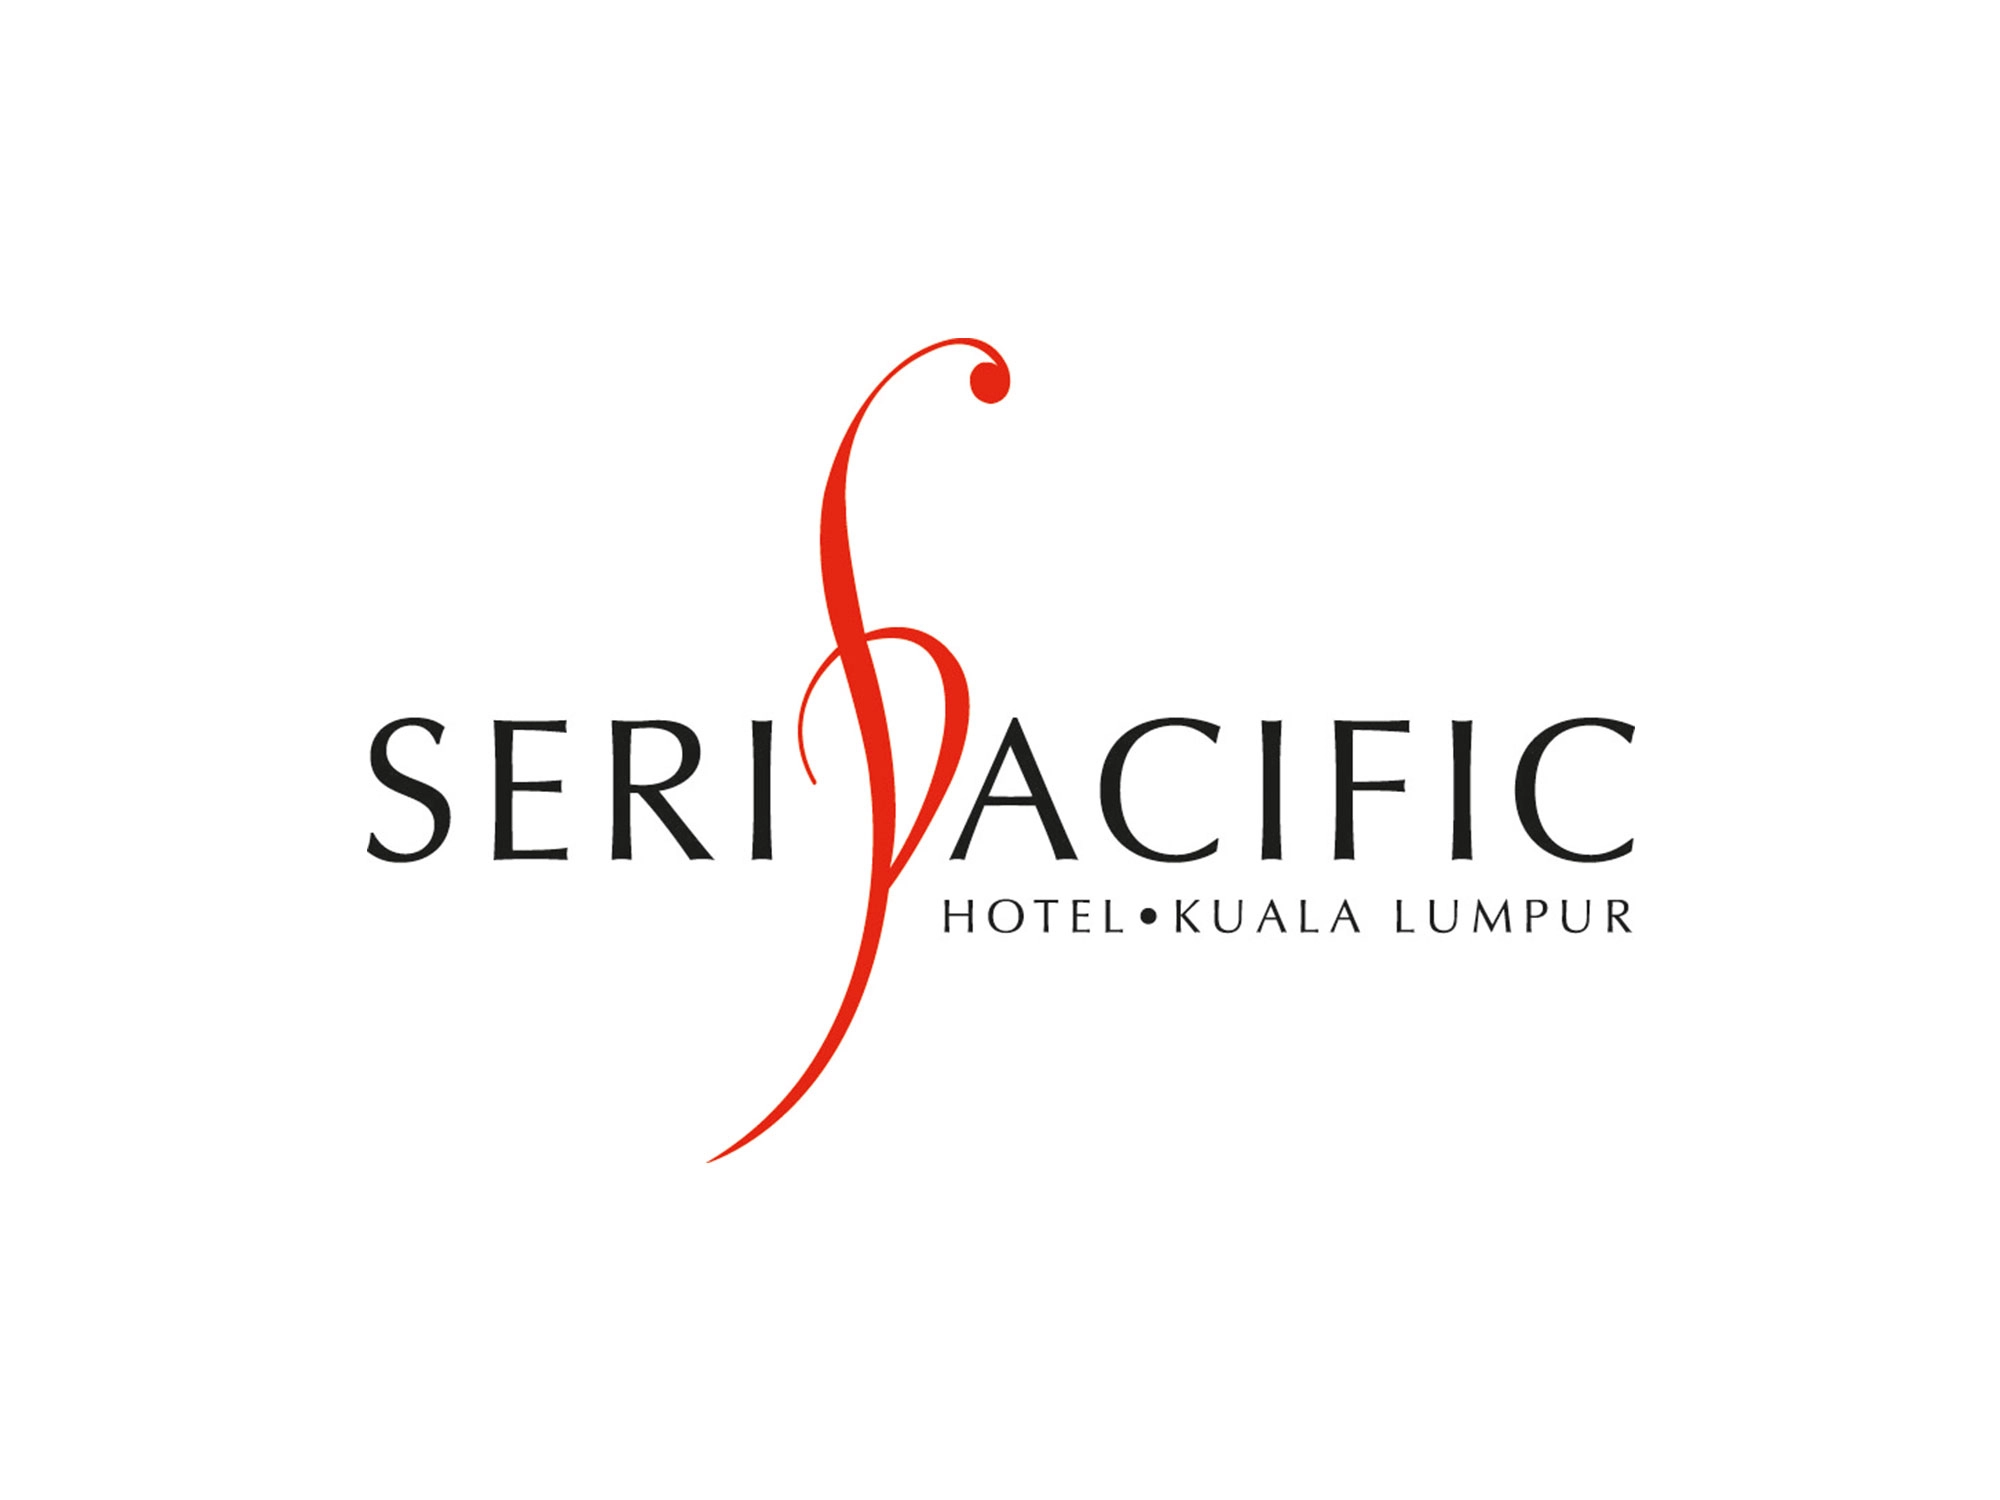 10% off on Seripacific hotel